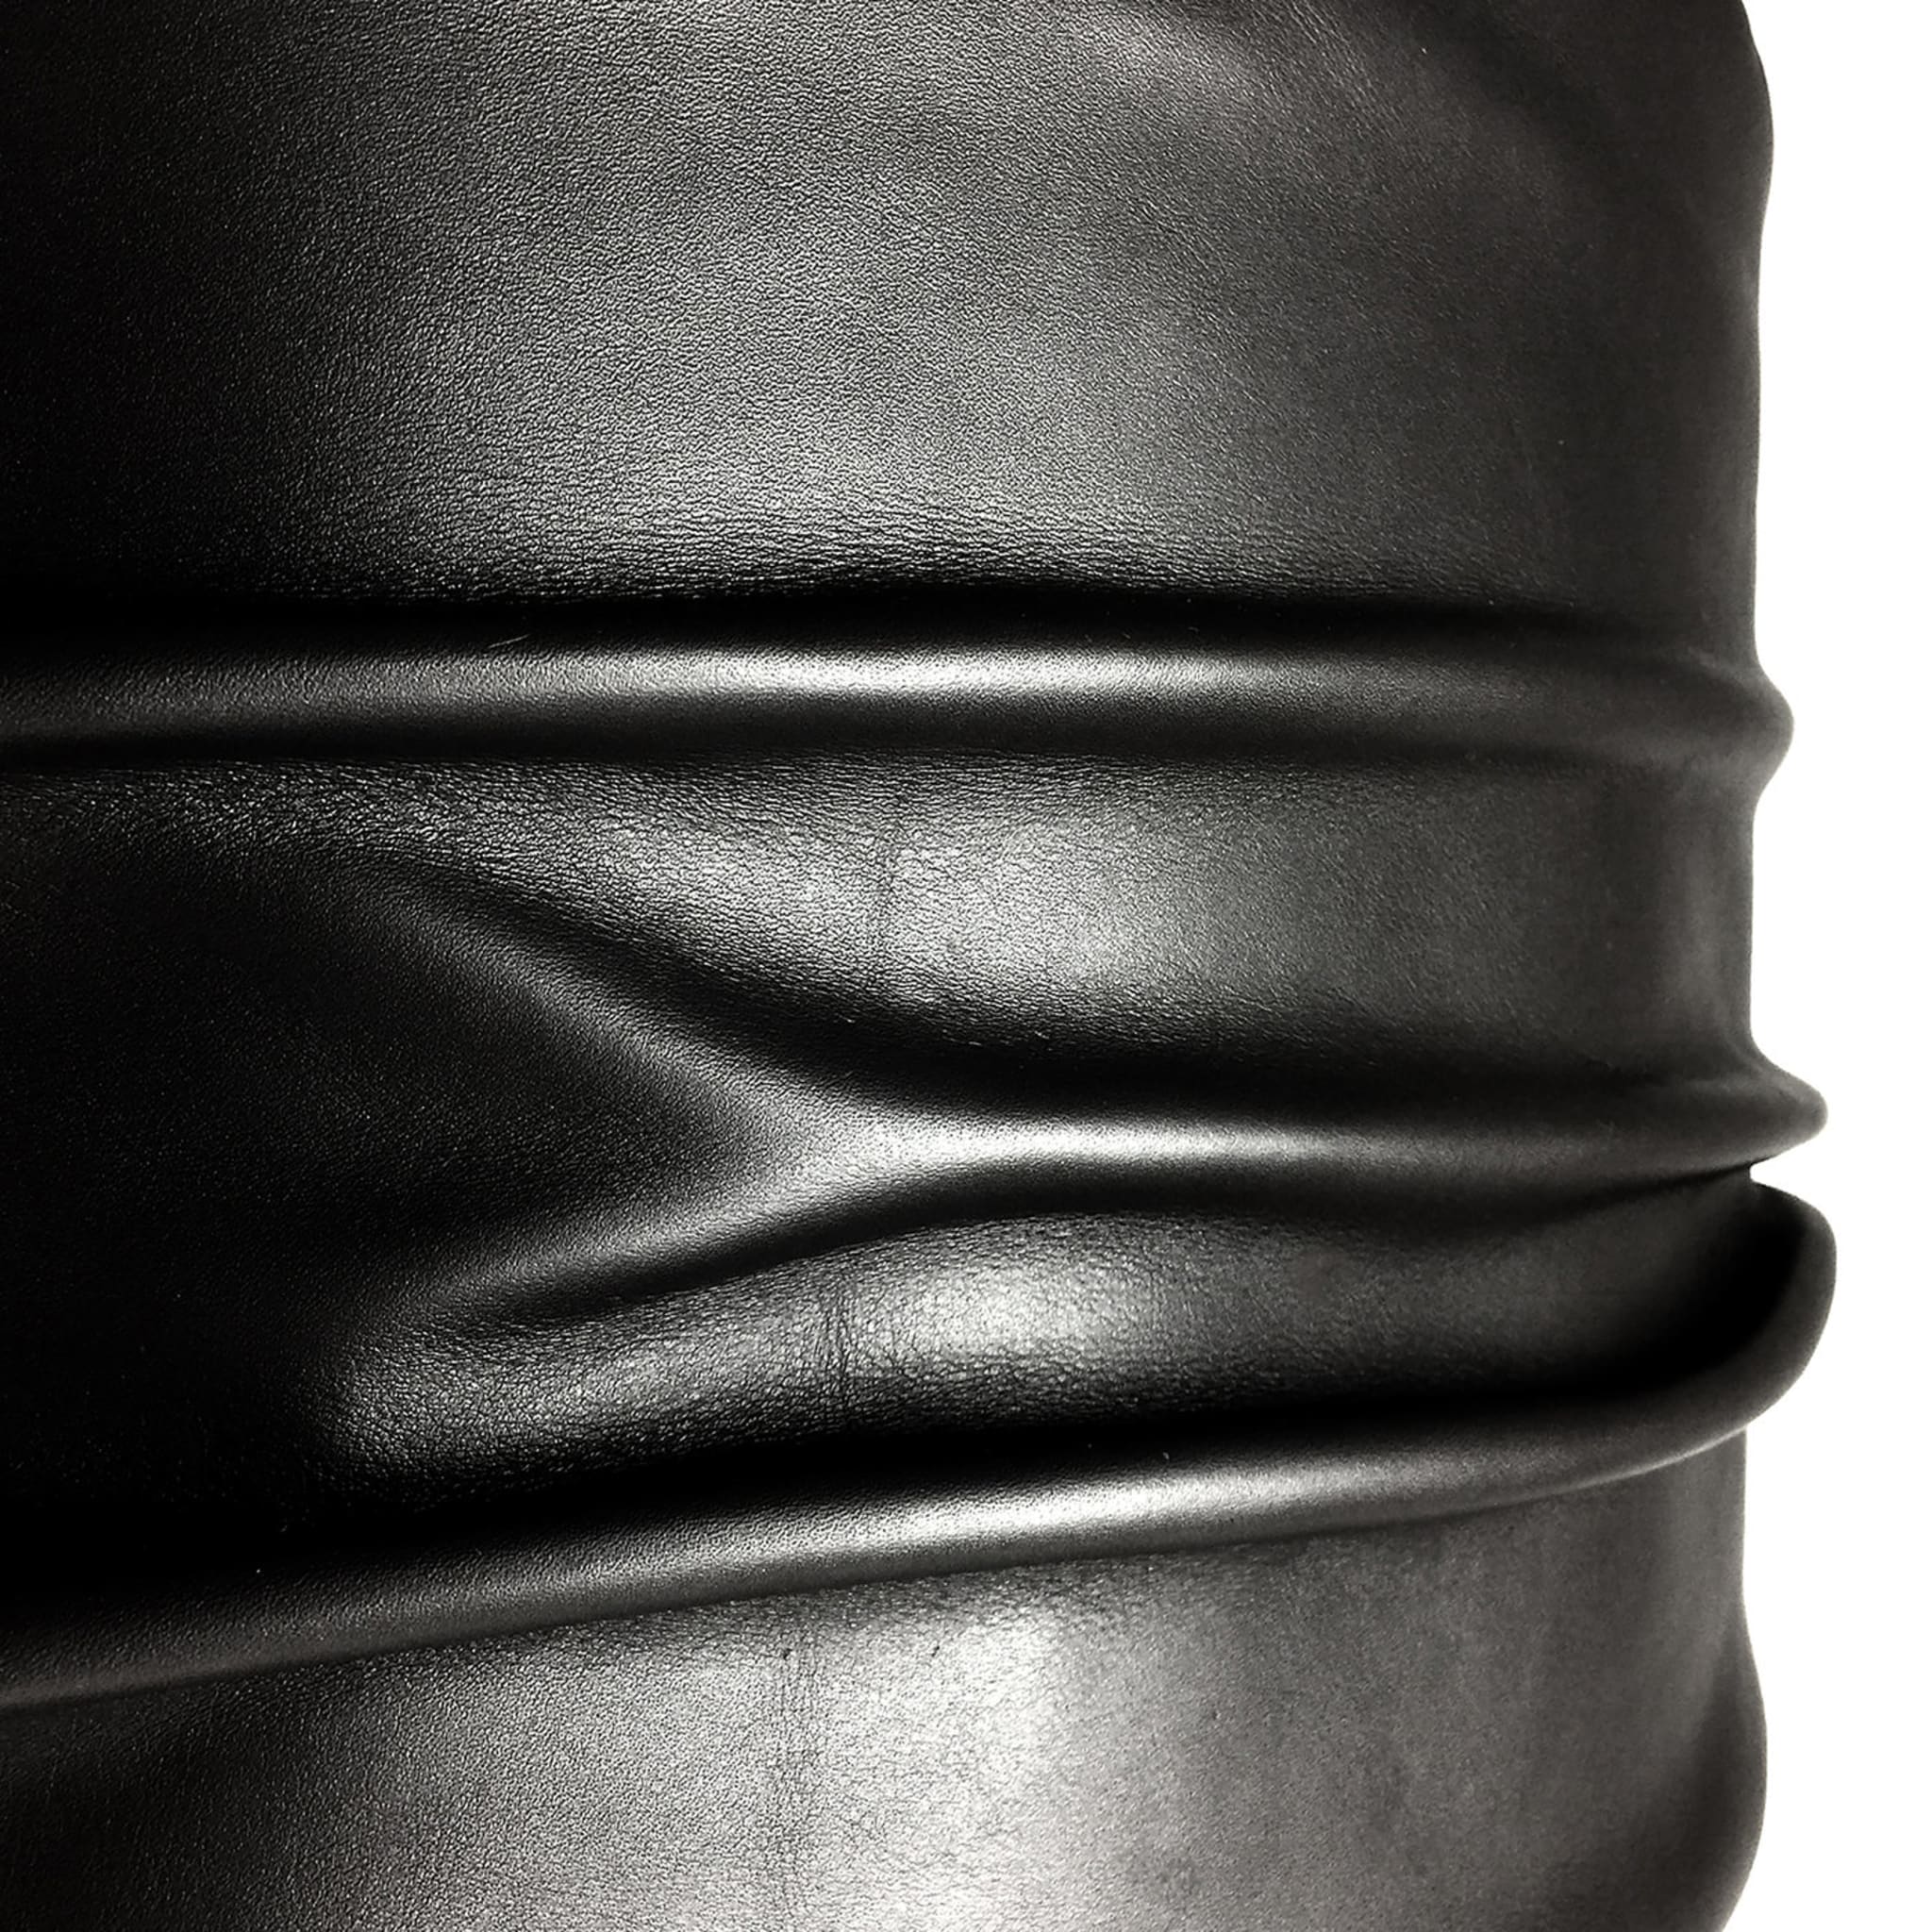 Semele Black Leather Floor Lamp #1 - Alternative view 2